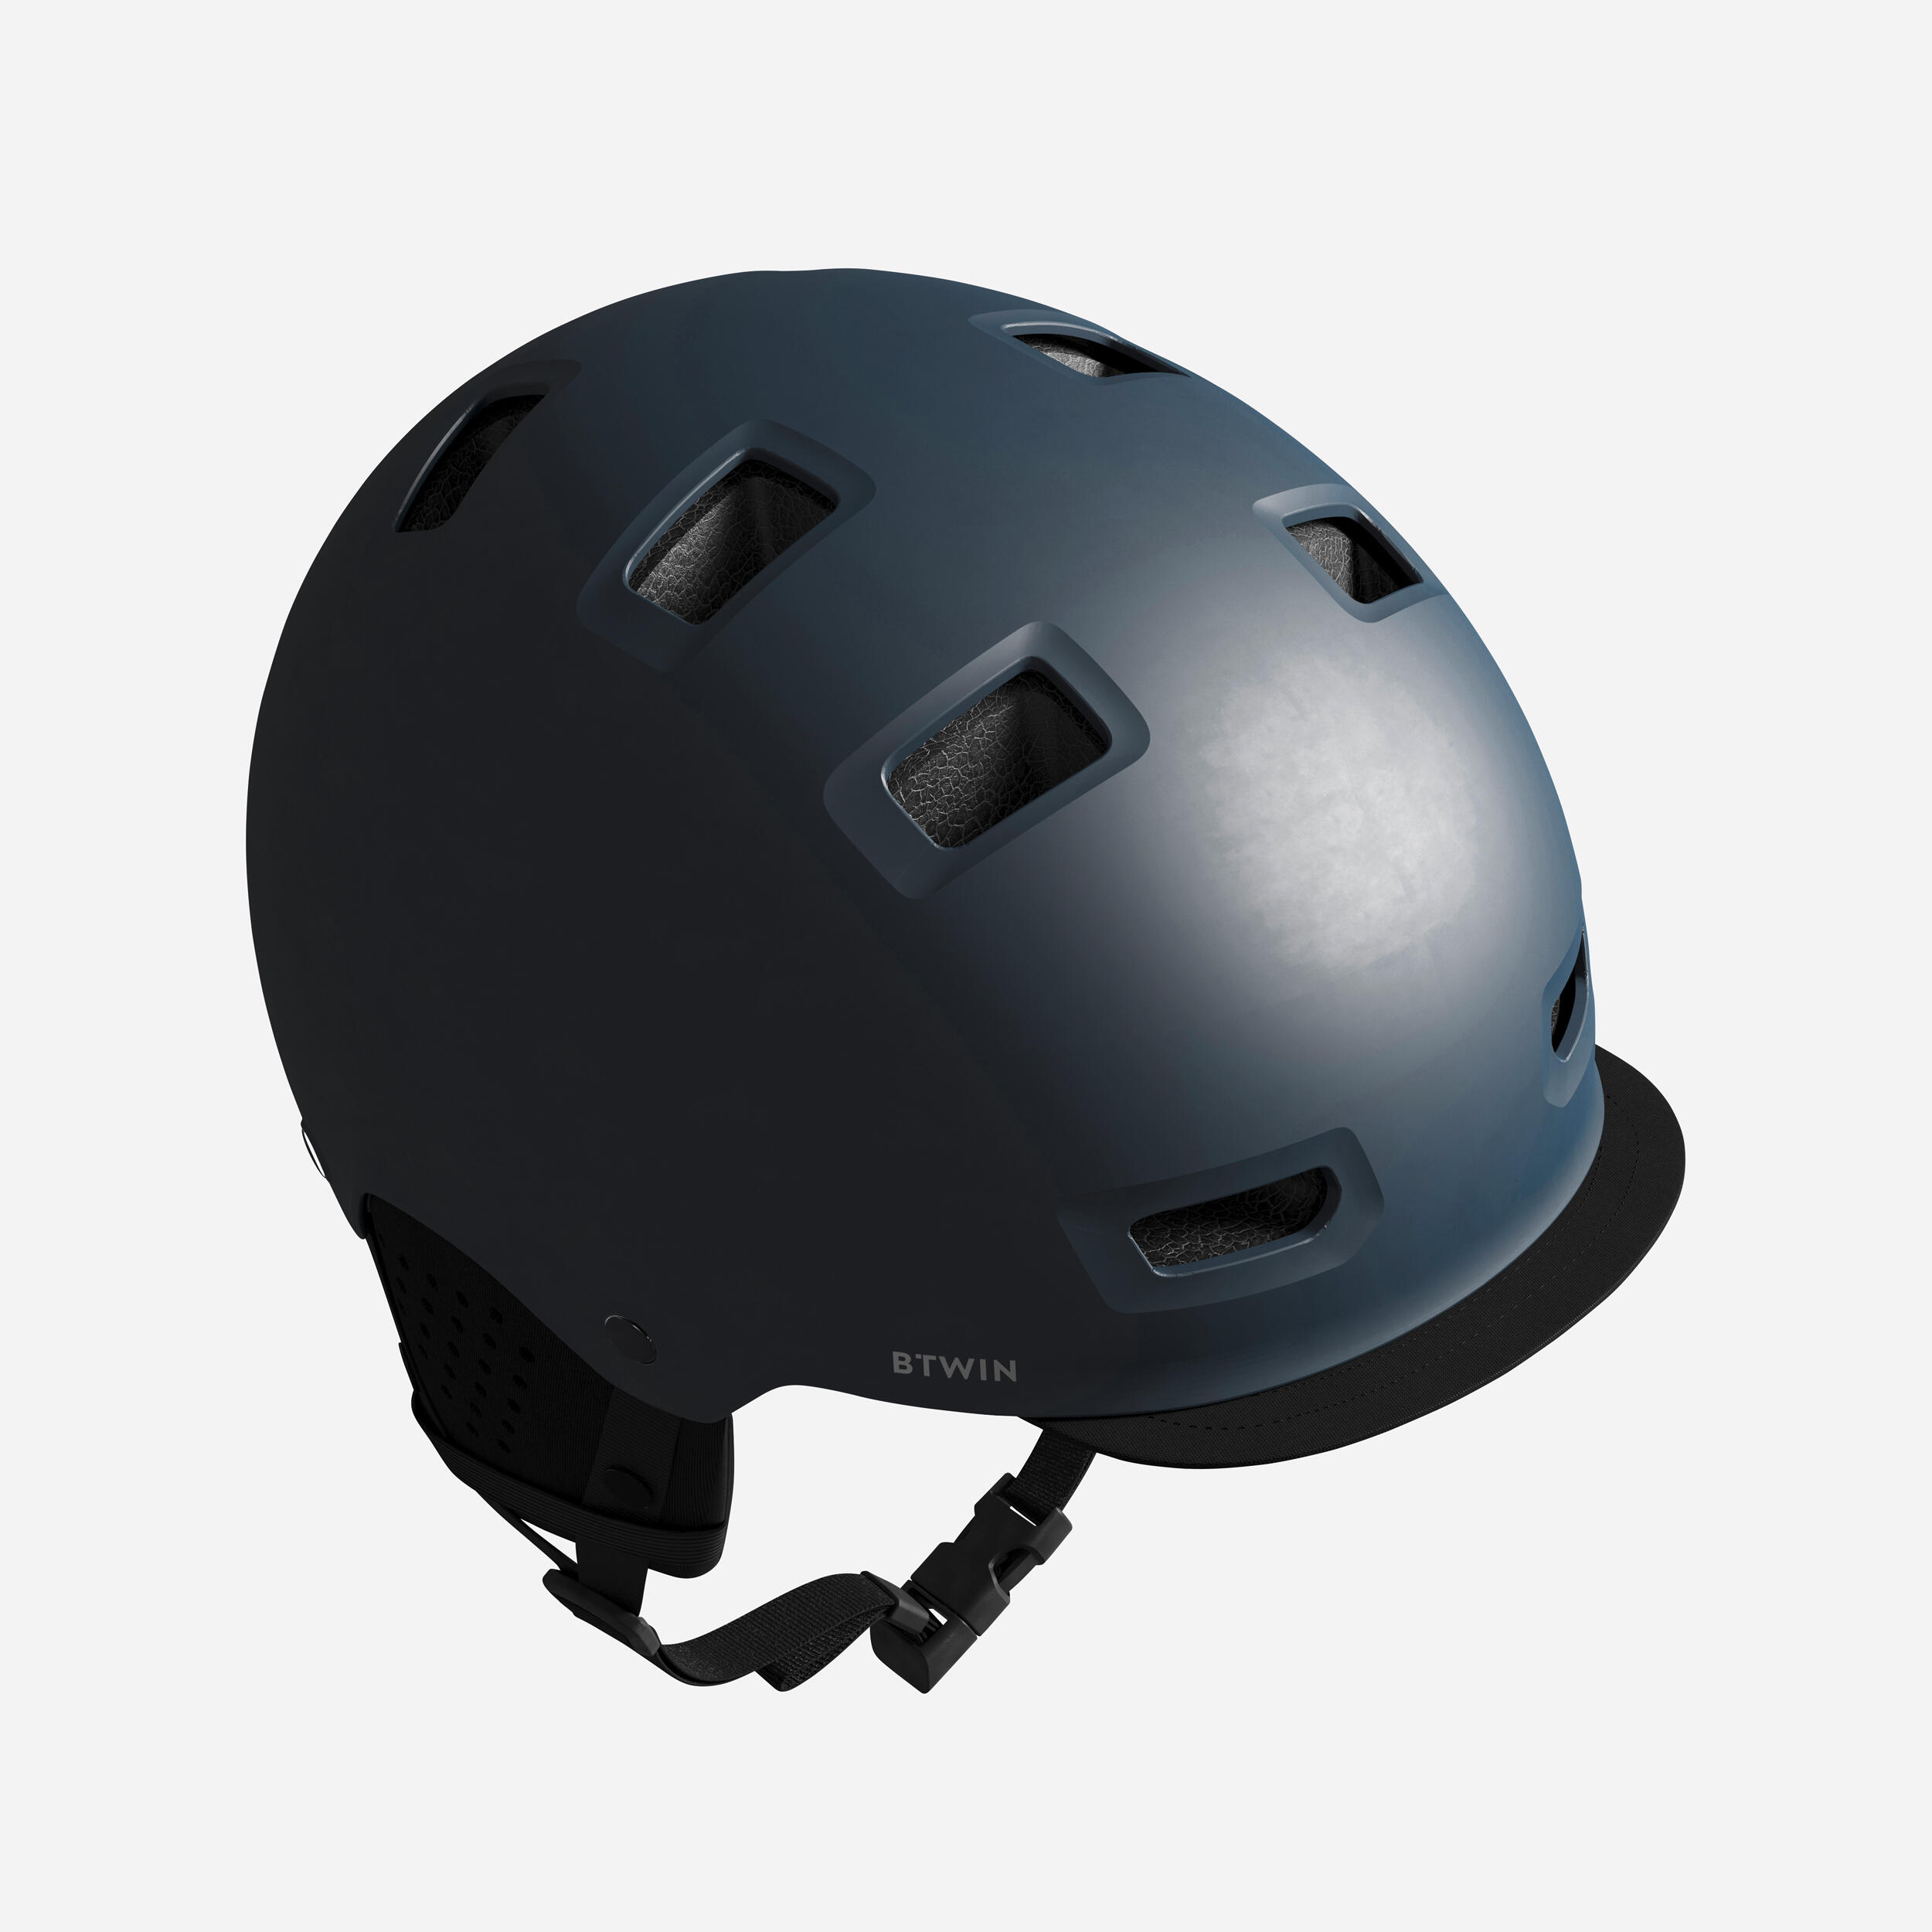 BTWIN 500 City Cycling Bowl Helmet - Dark Blue